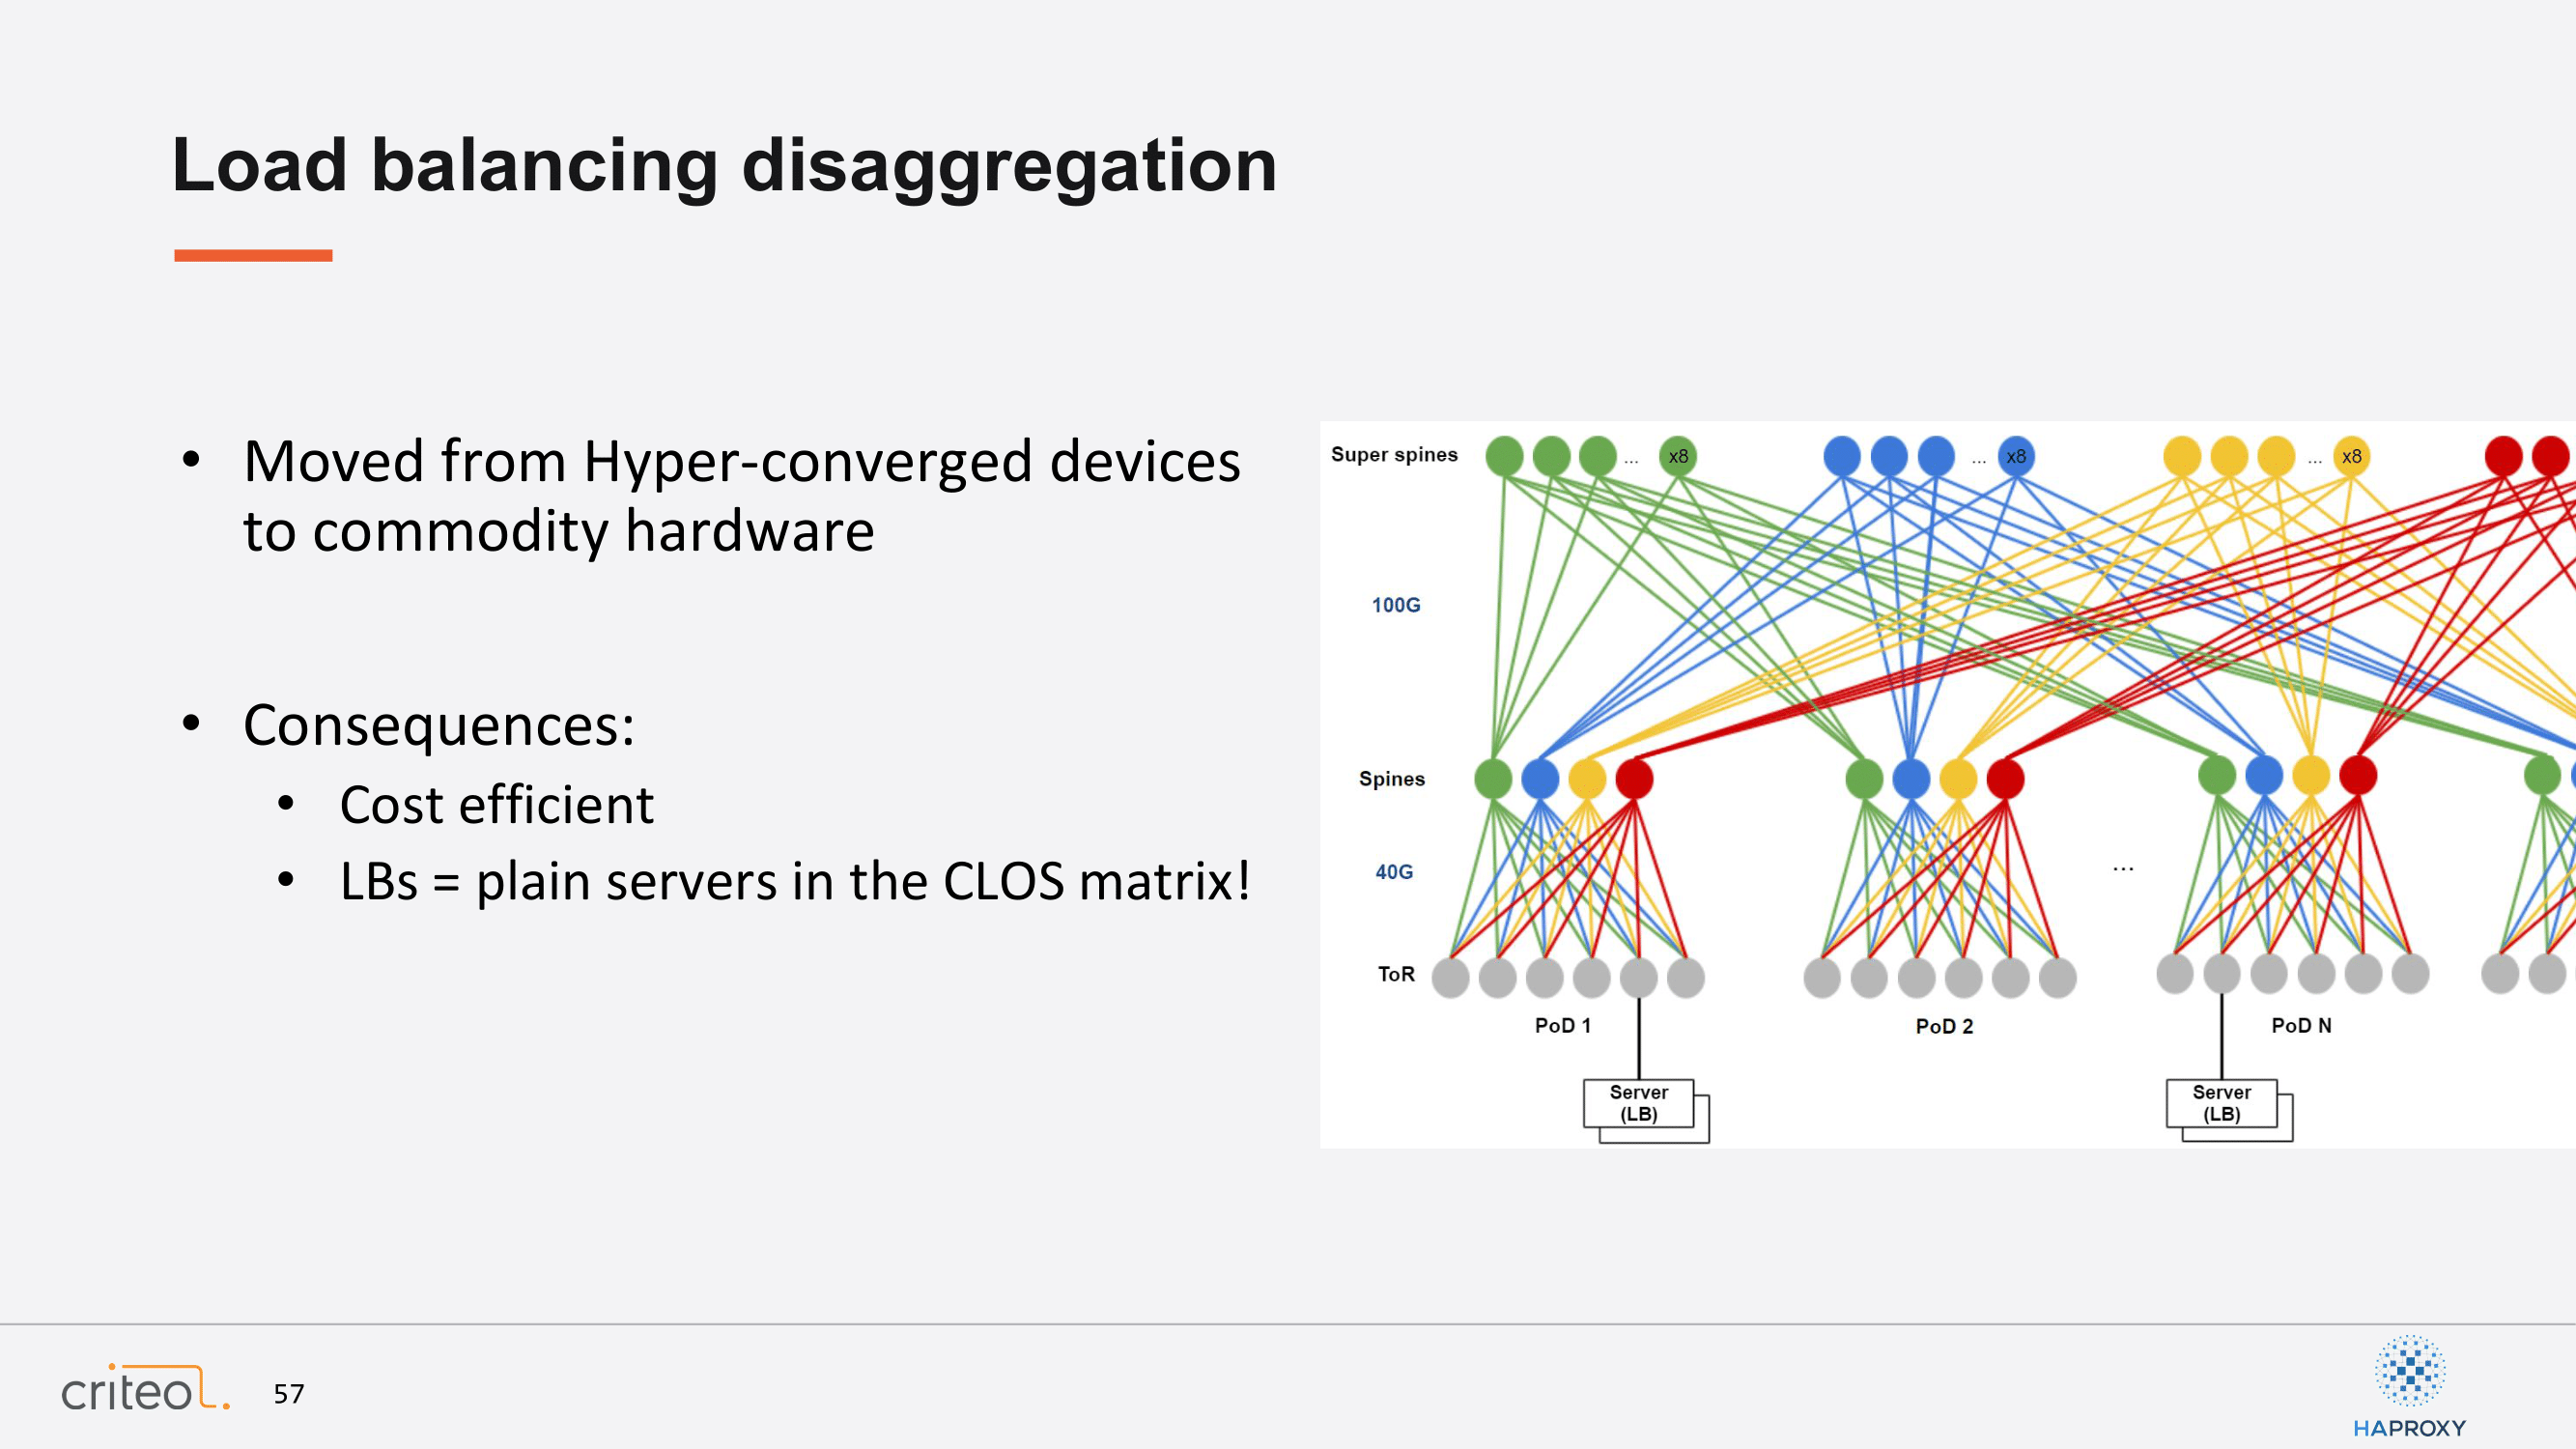 52.-load-balancing-disaggregation-19